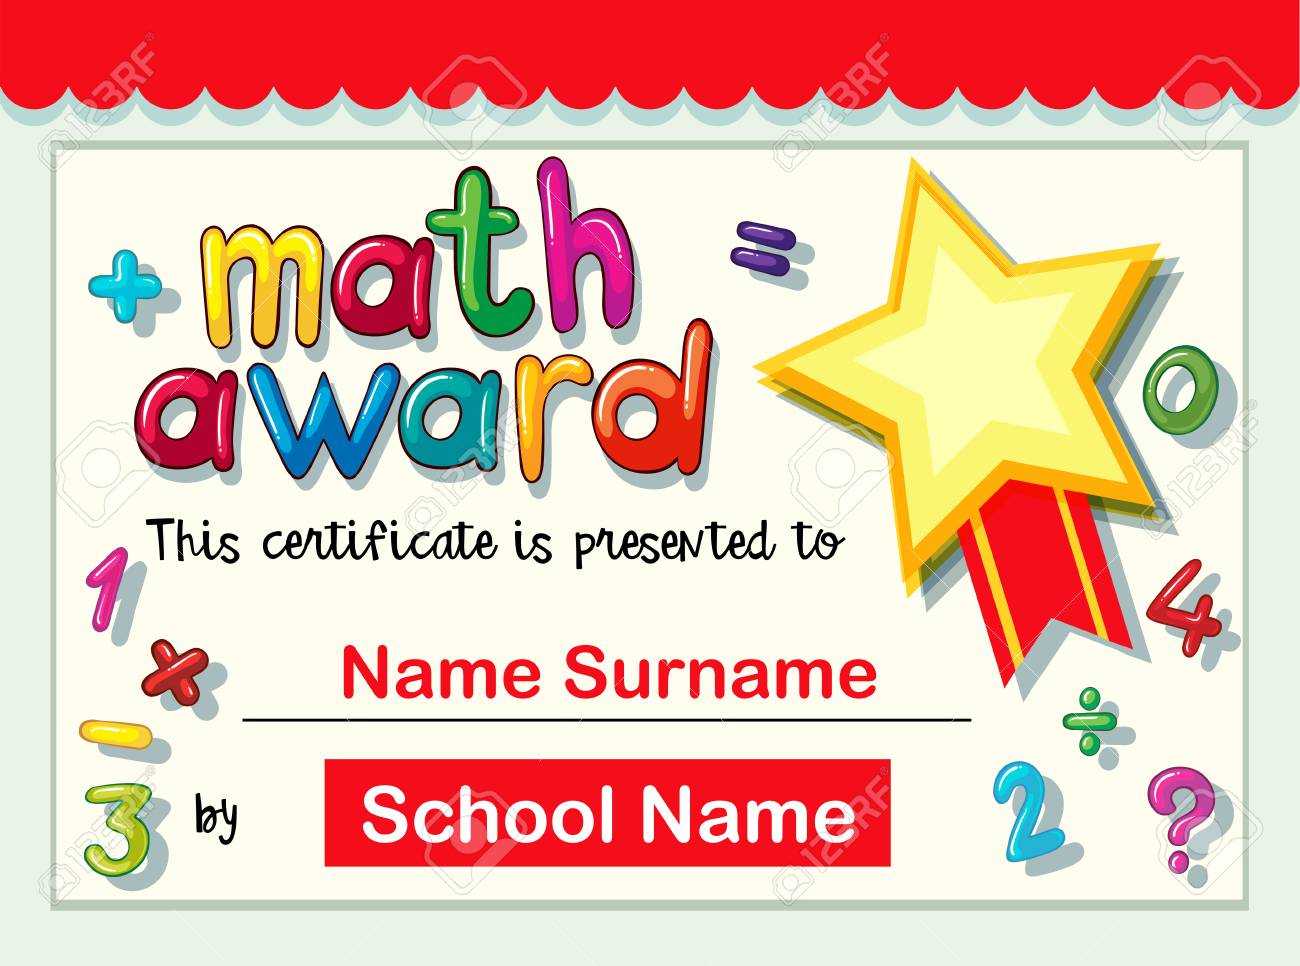 Certificate Template For Math Award Illustration With Math Certificate Template